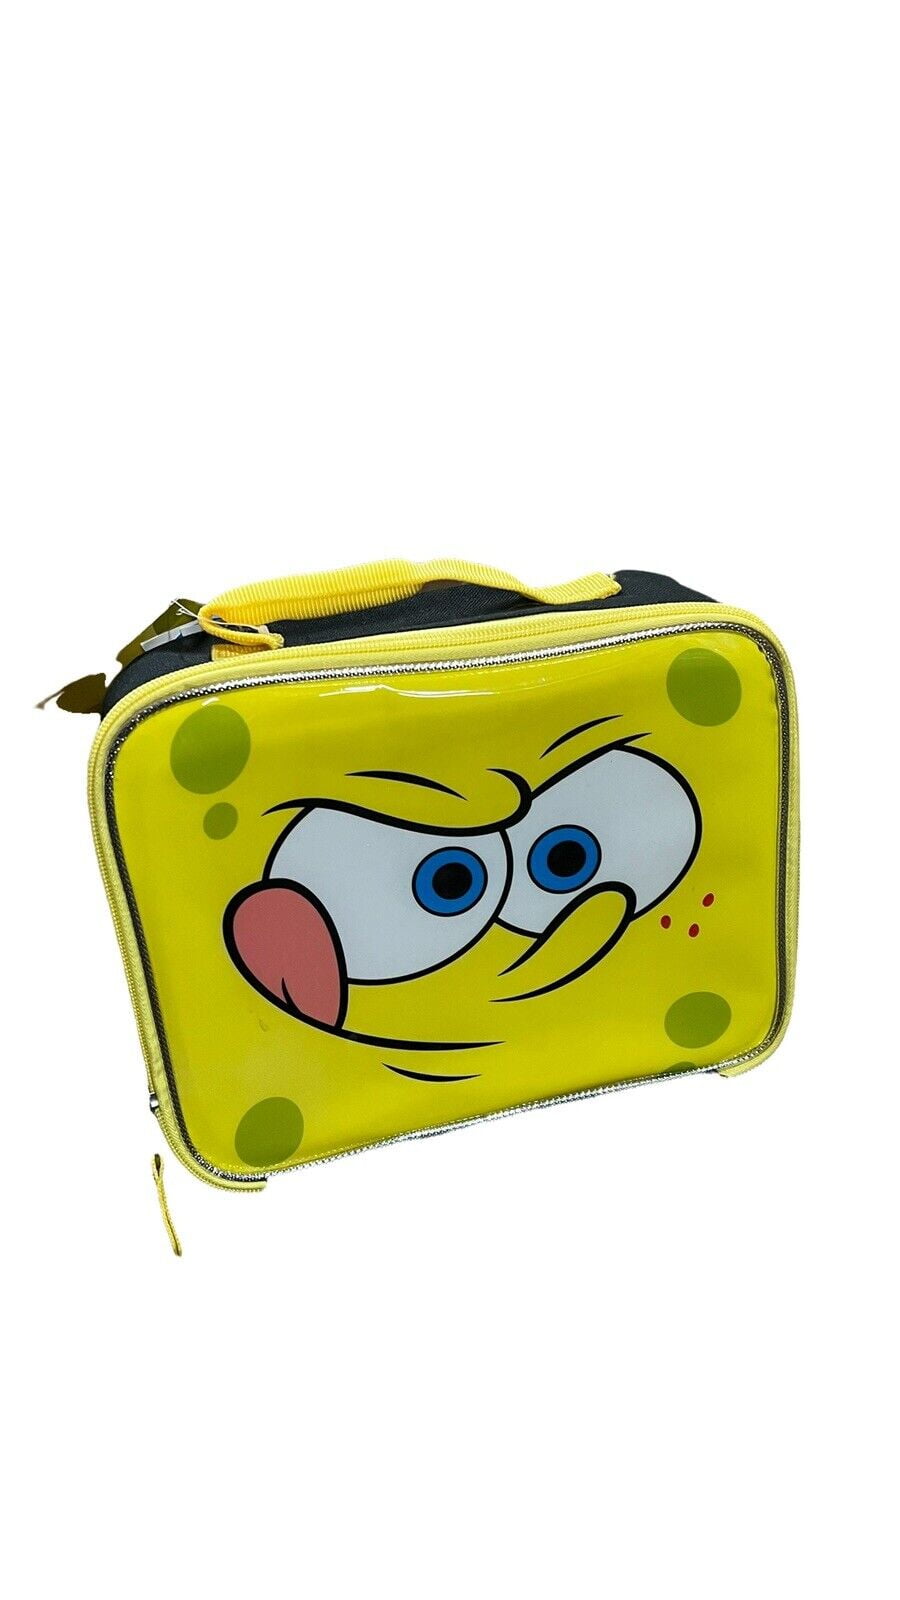 AWEHIRU Spongebob Squarepants Lunch Box Insulated Kit for Boys Girls Kids  with Stickers and More (Spongebob School Supplies)